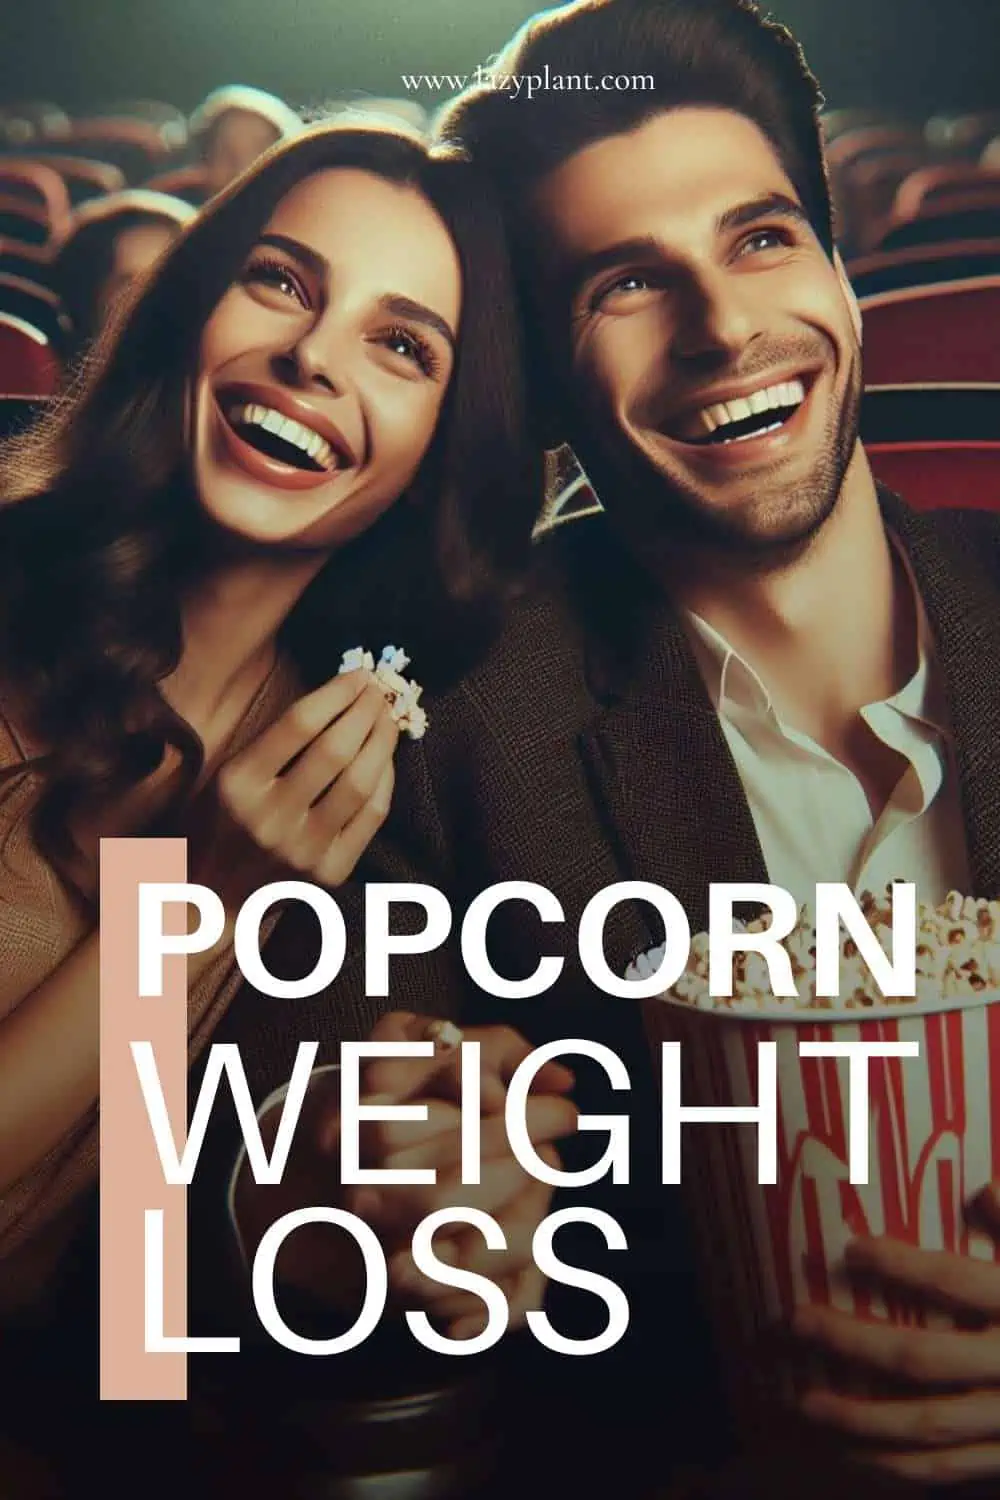 Popcorn at the movies make you fat.